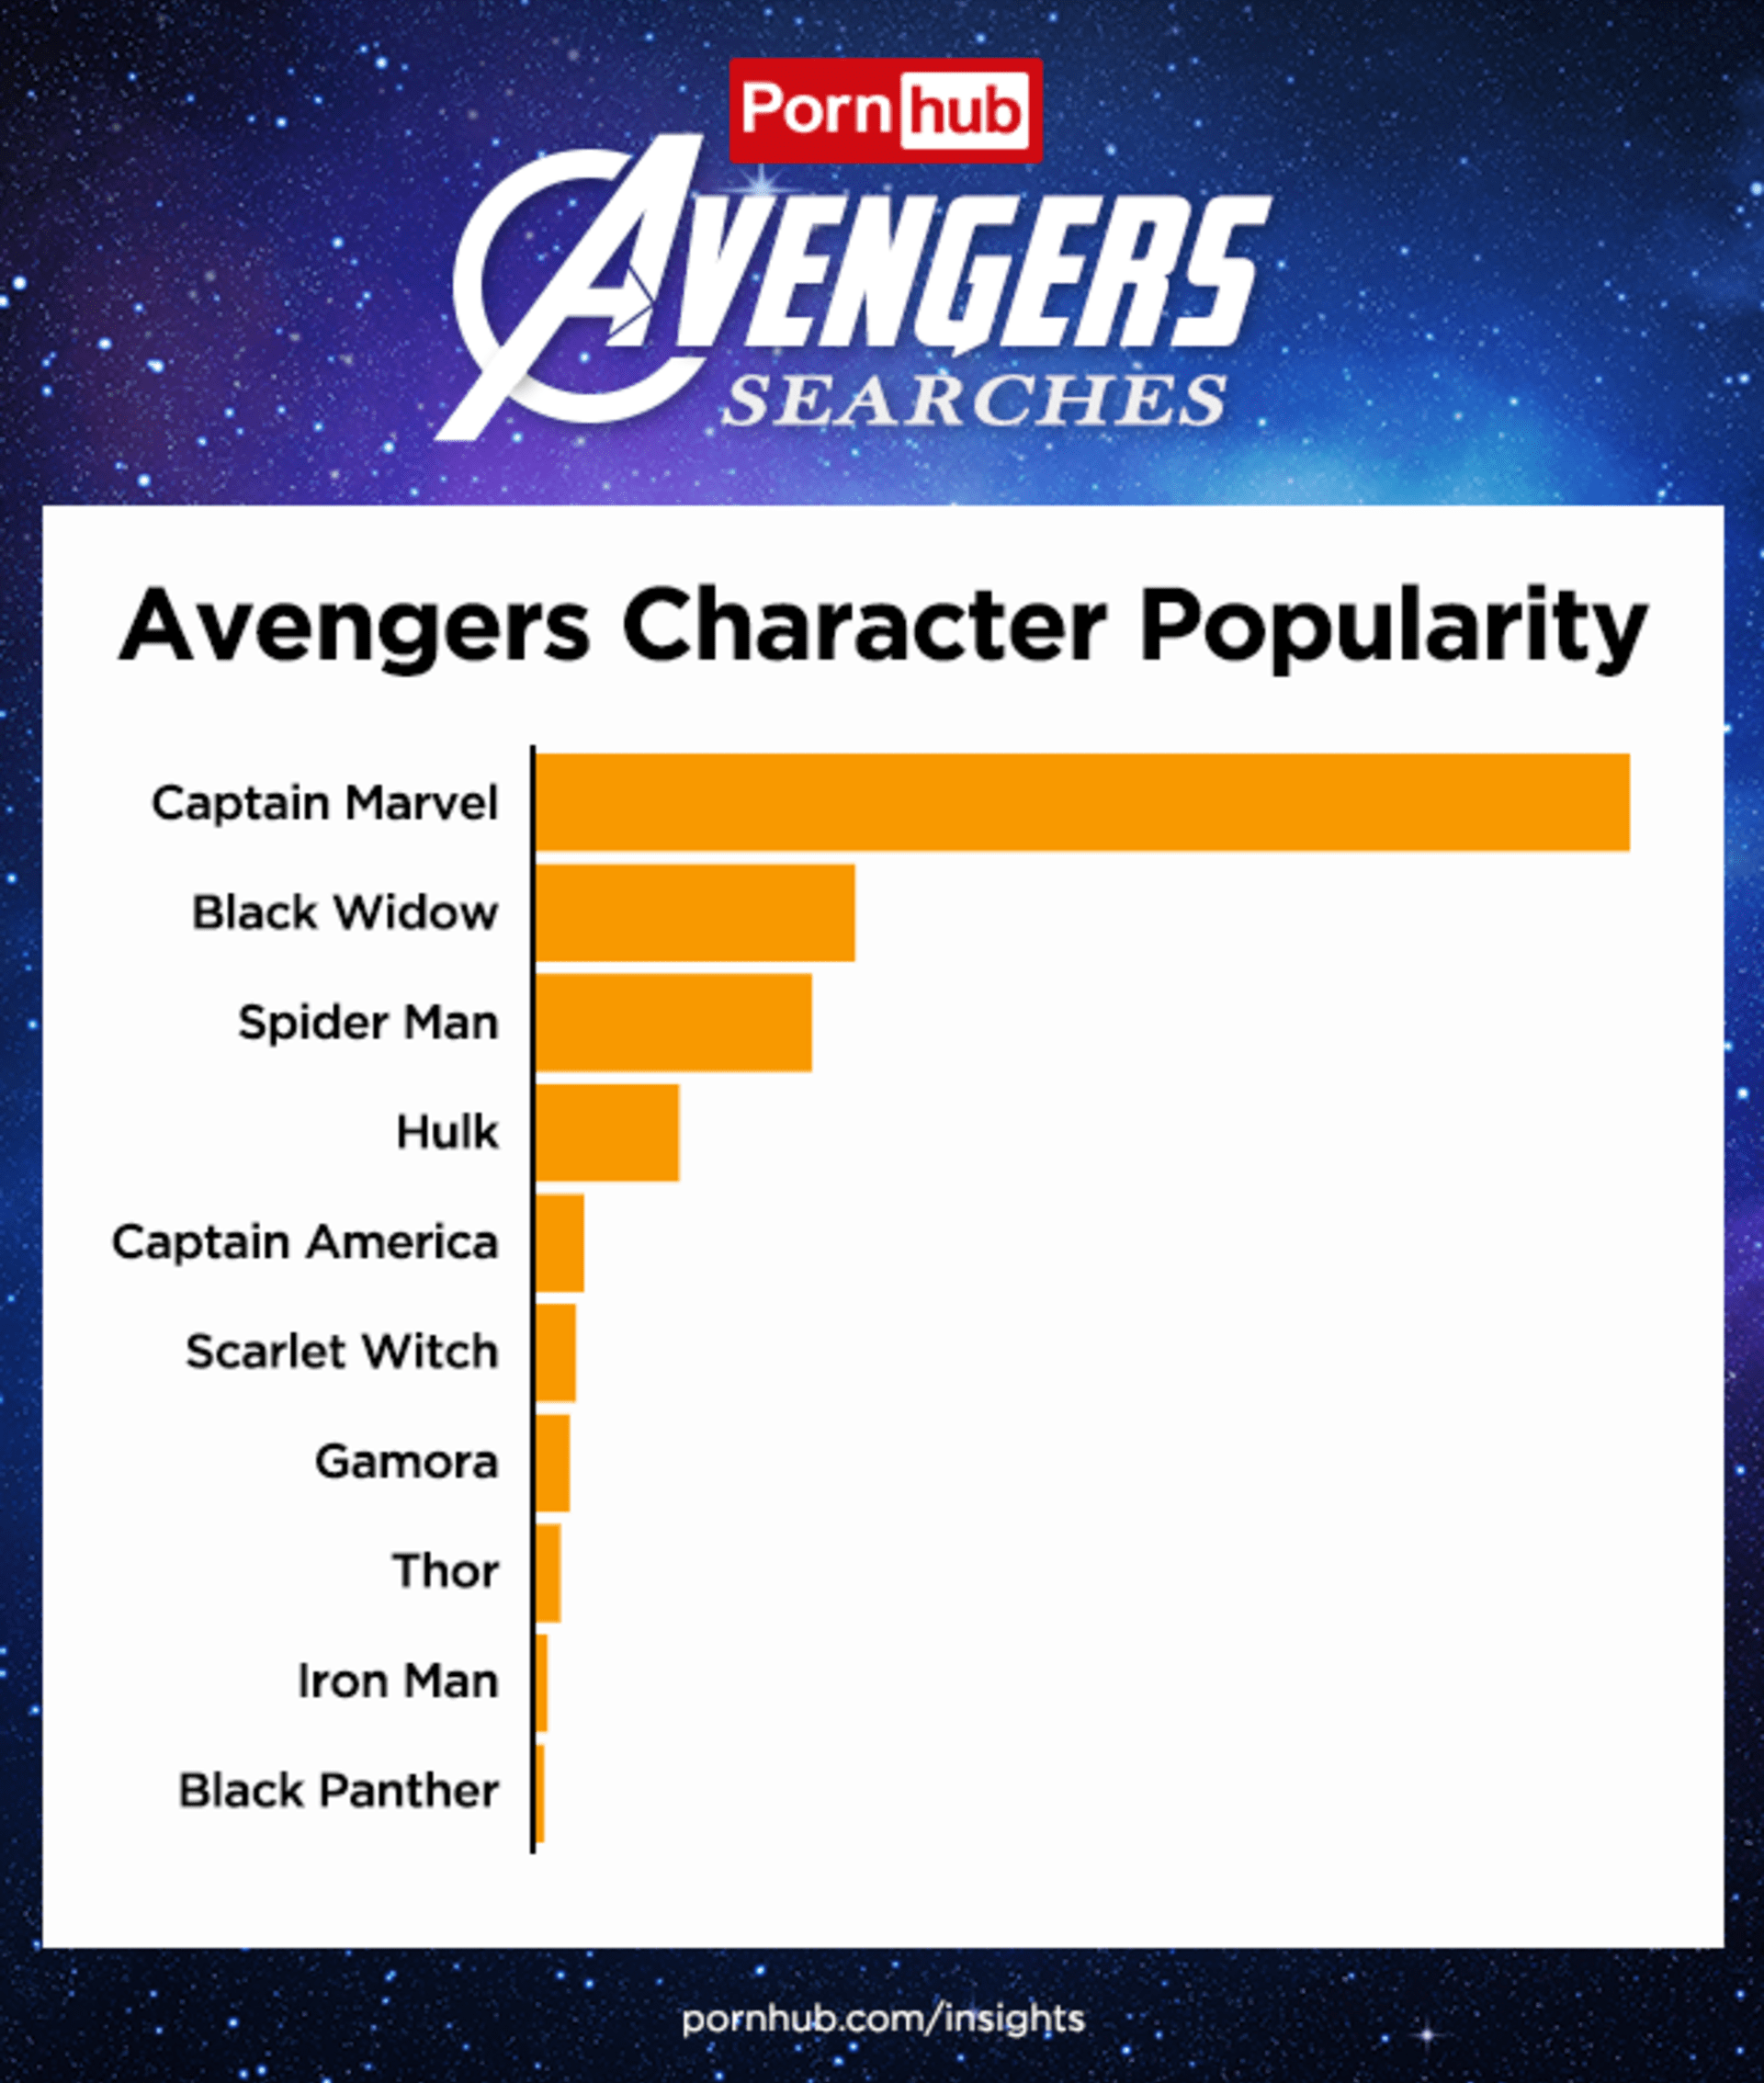 Pornhub statistika k Avengers: Endgame 1